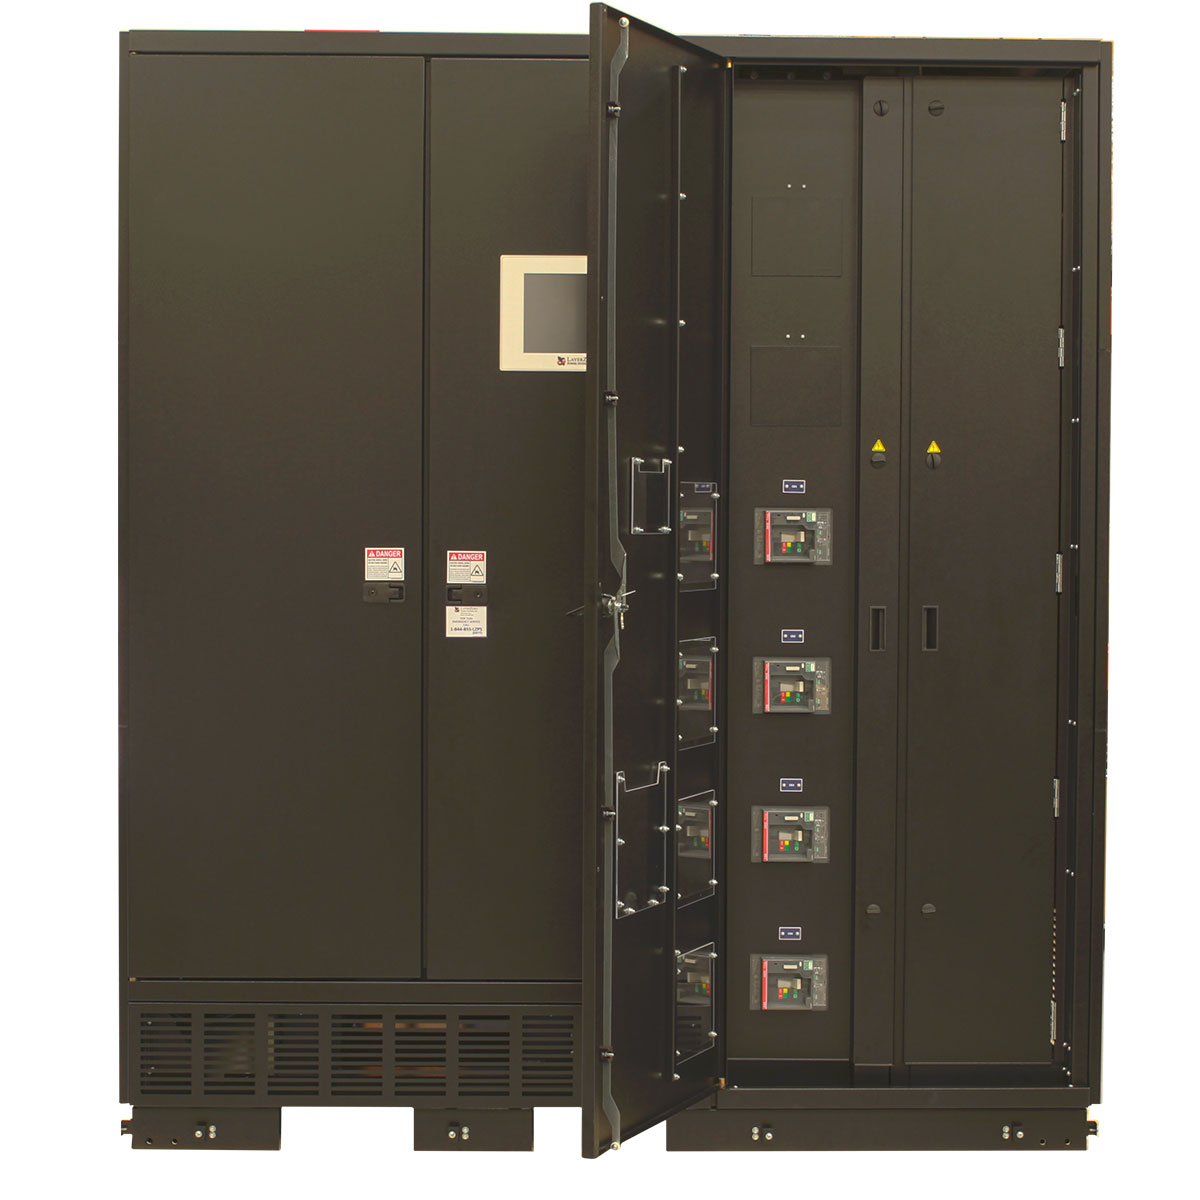 The LayerZero Series 70 ePODs: Type-X 750 kVA Power Distribution Unit (PDU) Circuit Breaker Section.